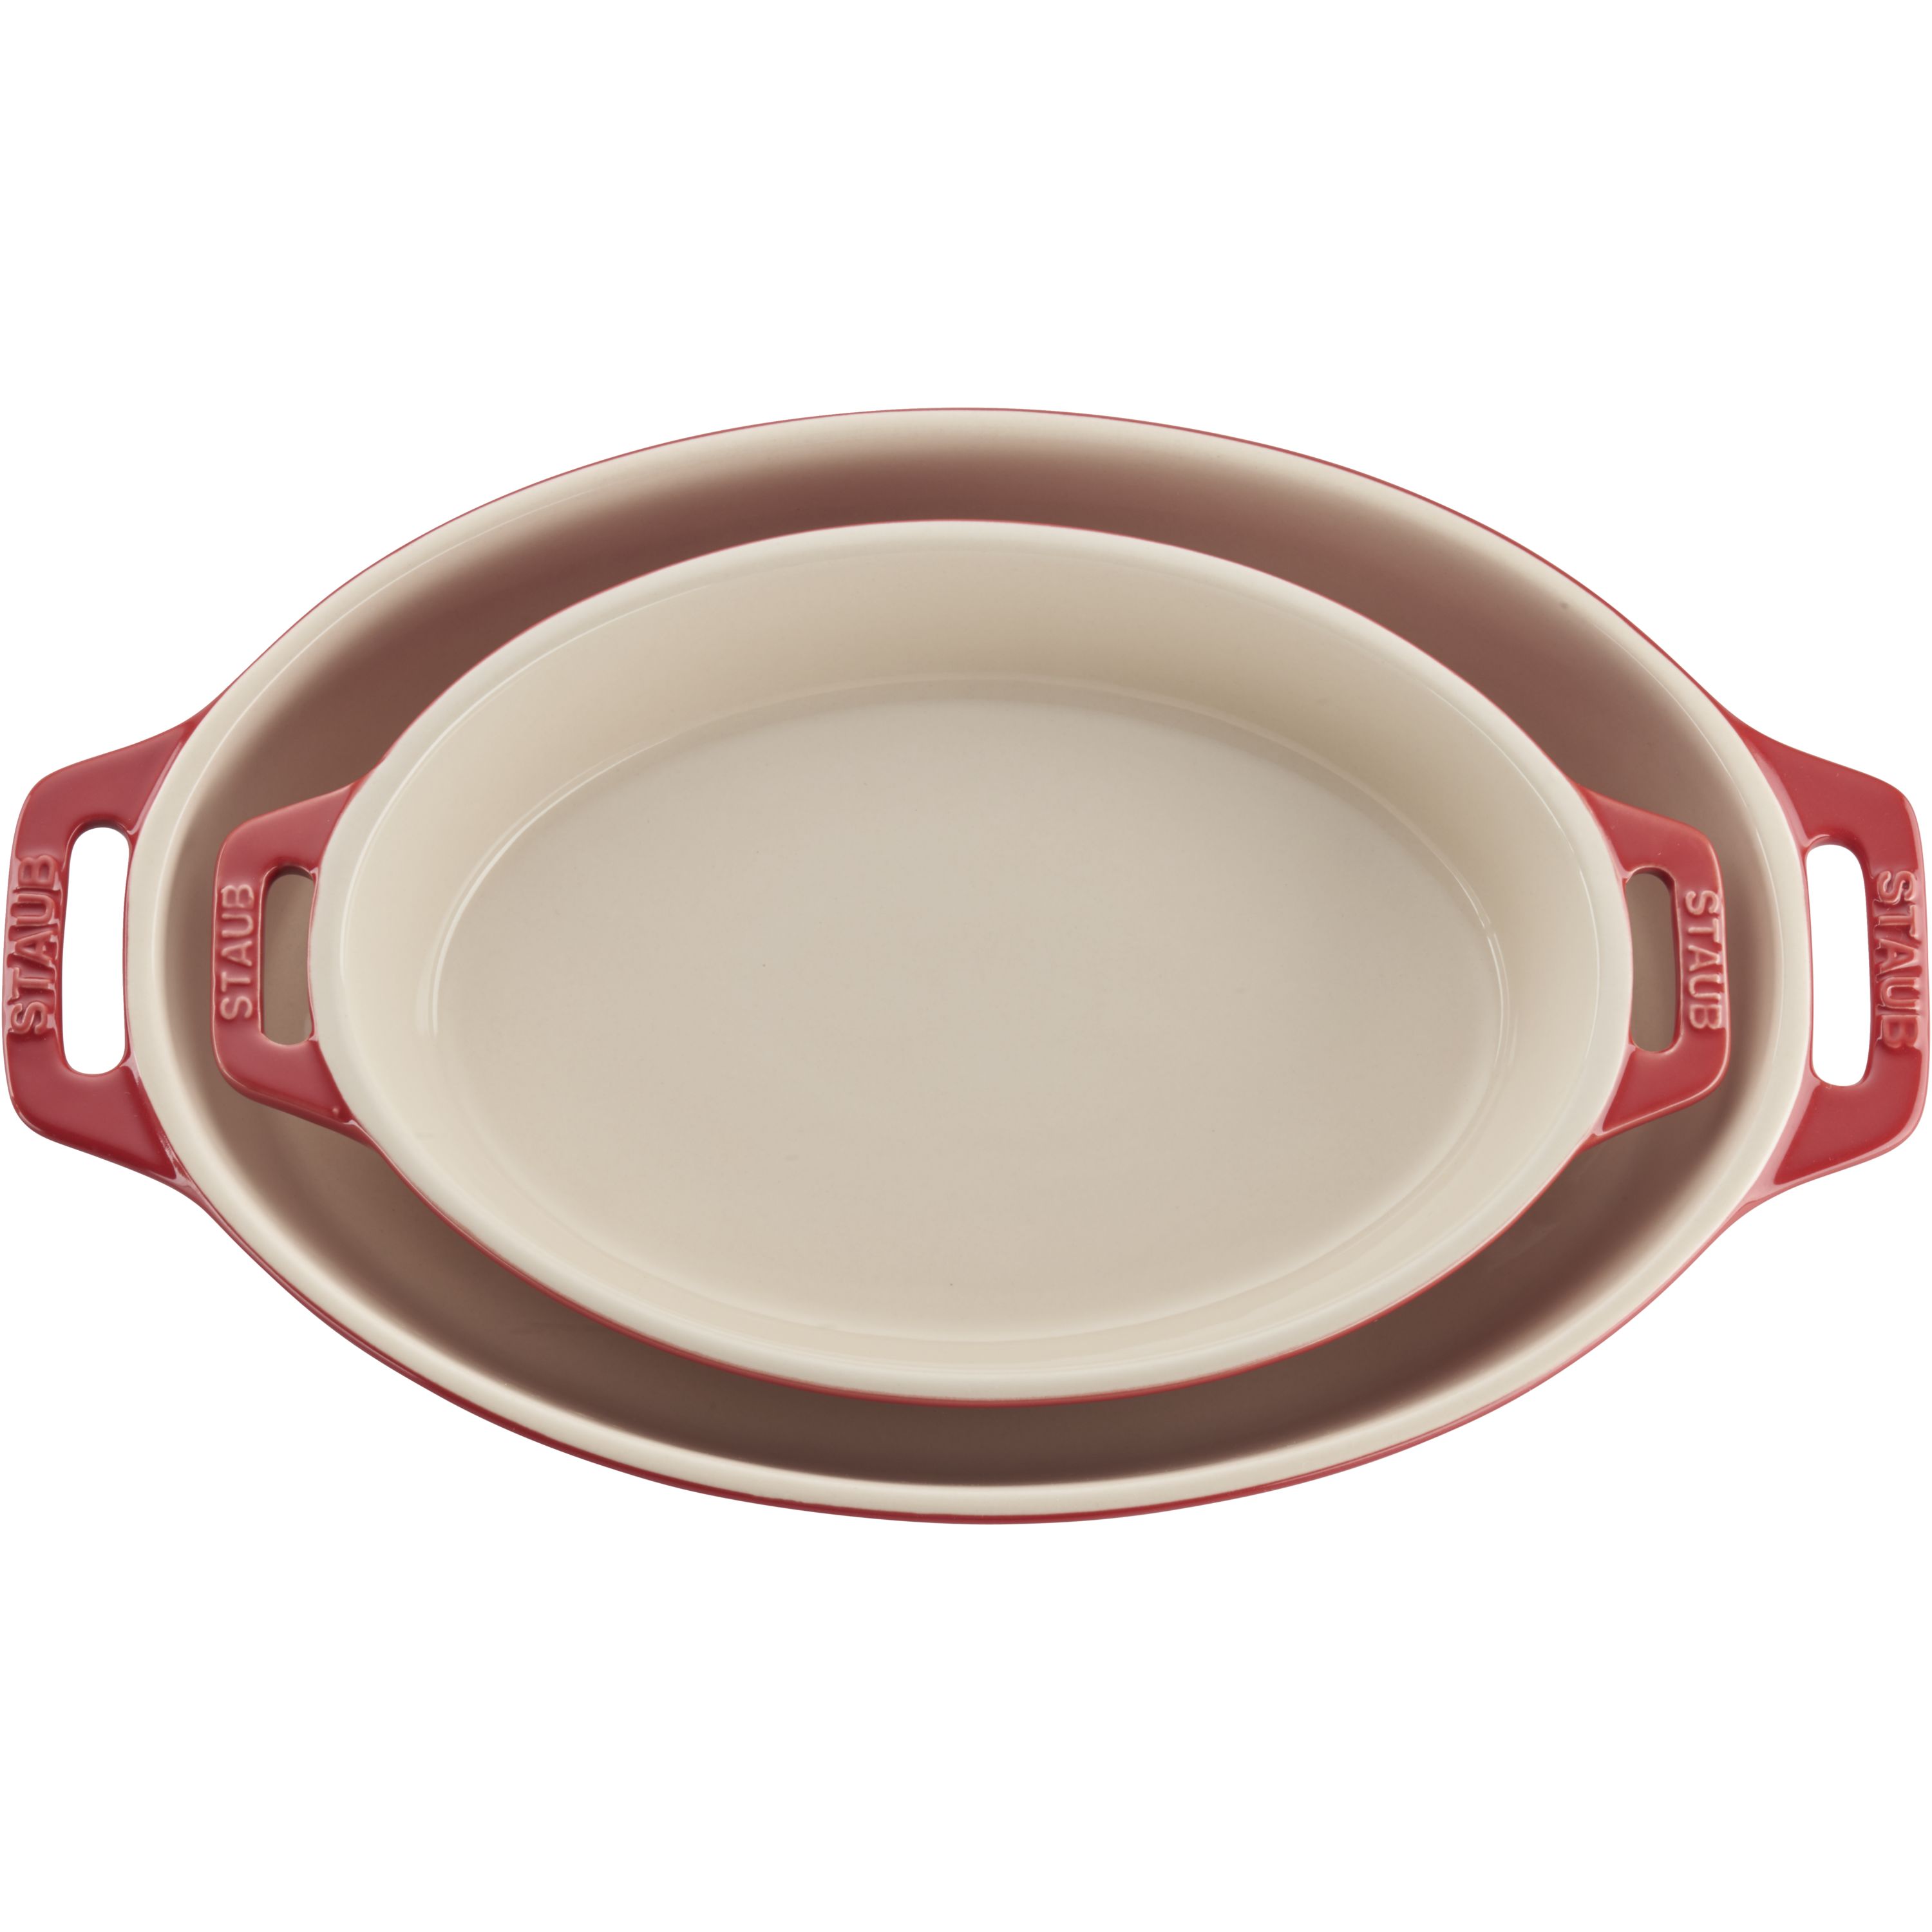 Staub 2-Piece Ceramic Nesting Oval Baking Dishes Set, White on Food52